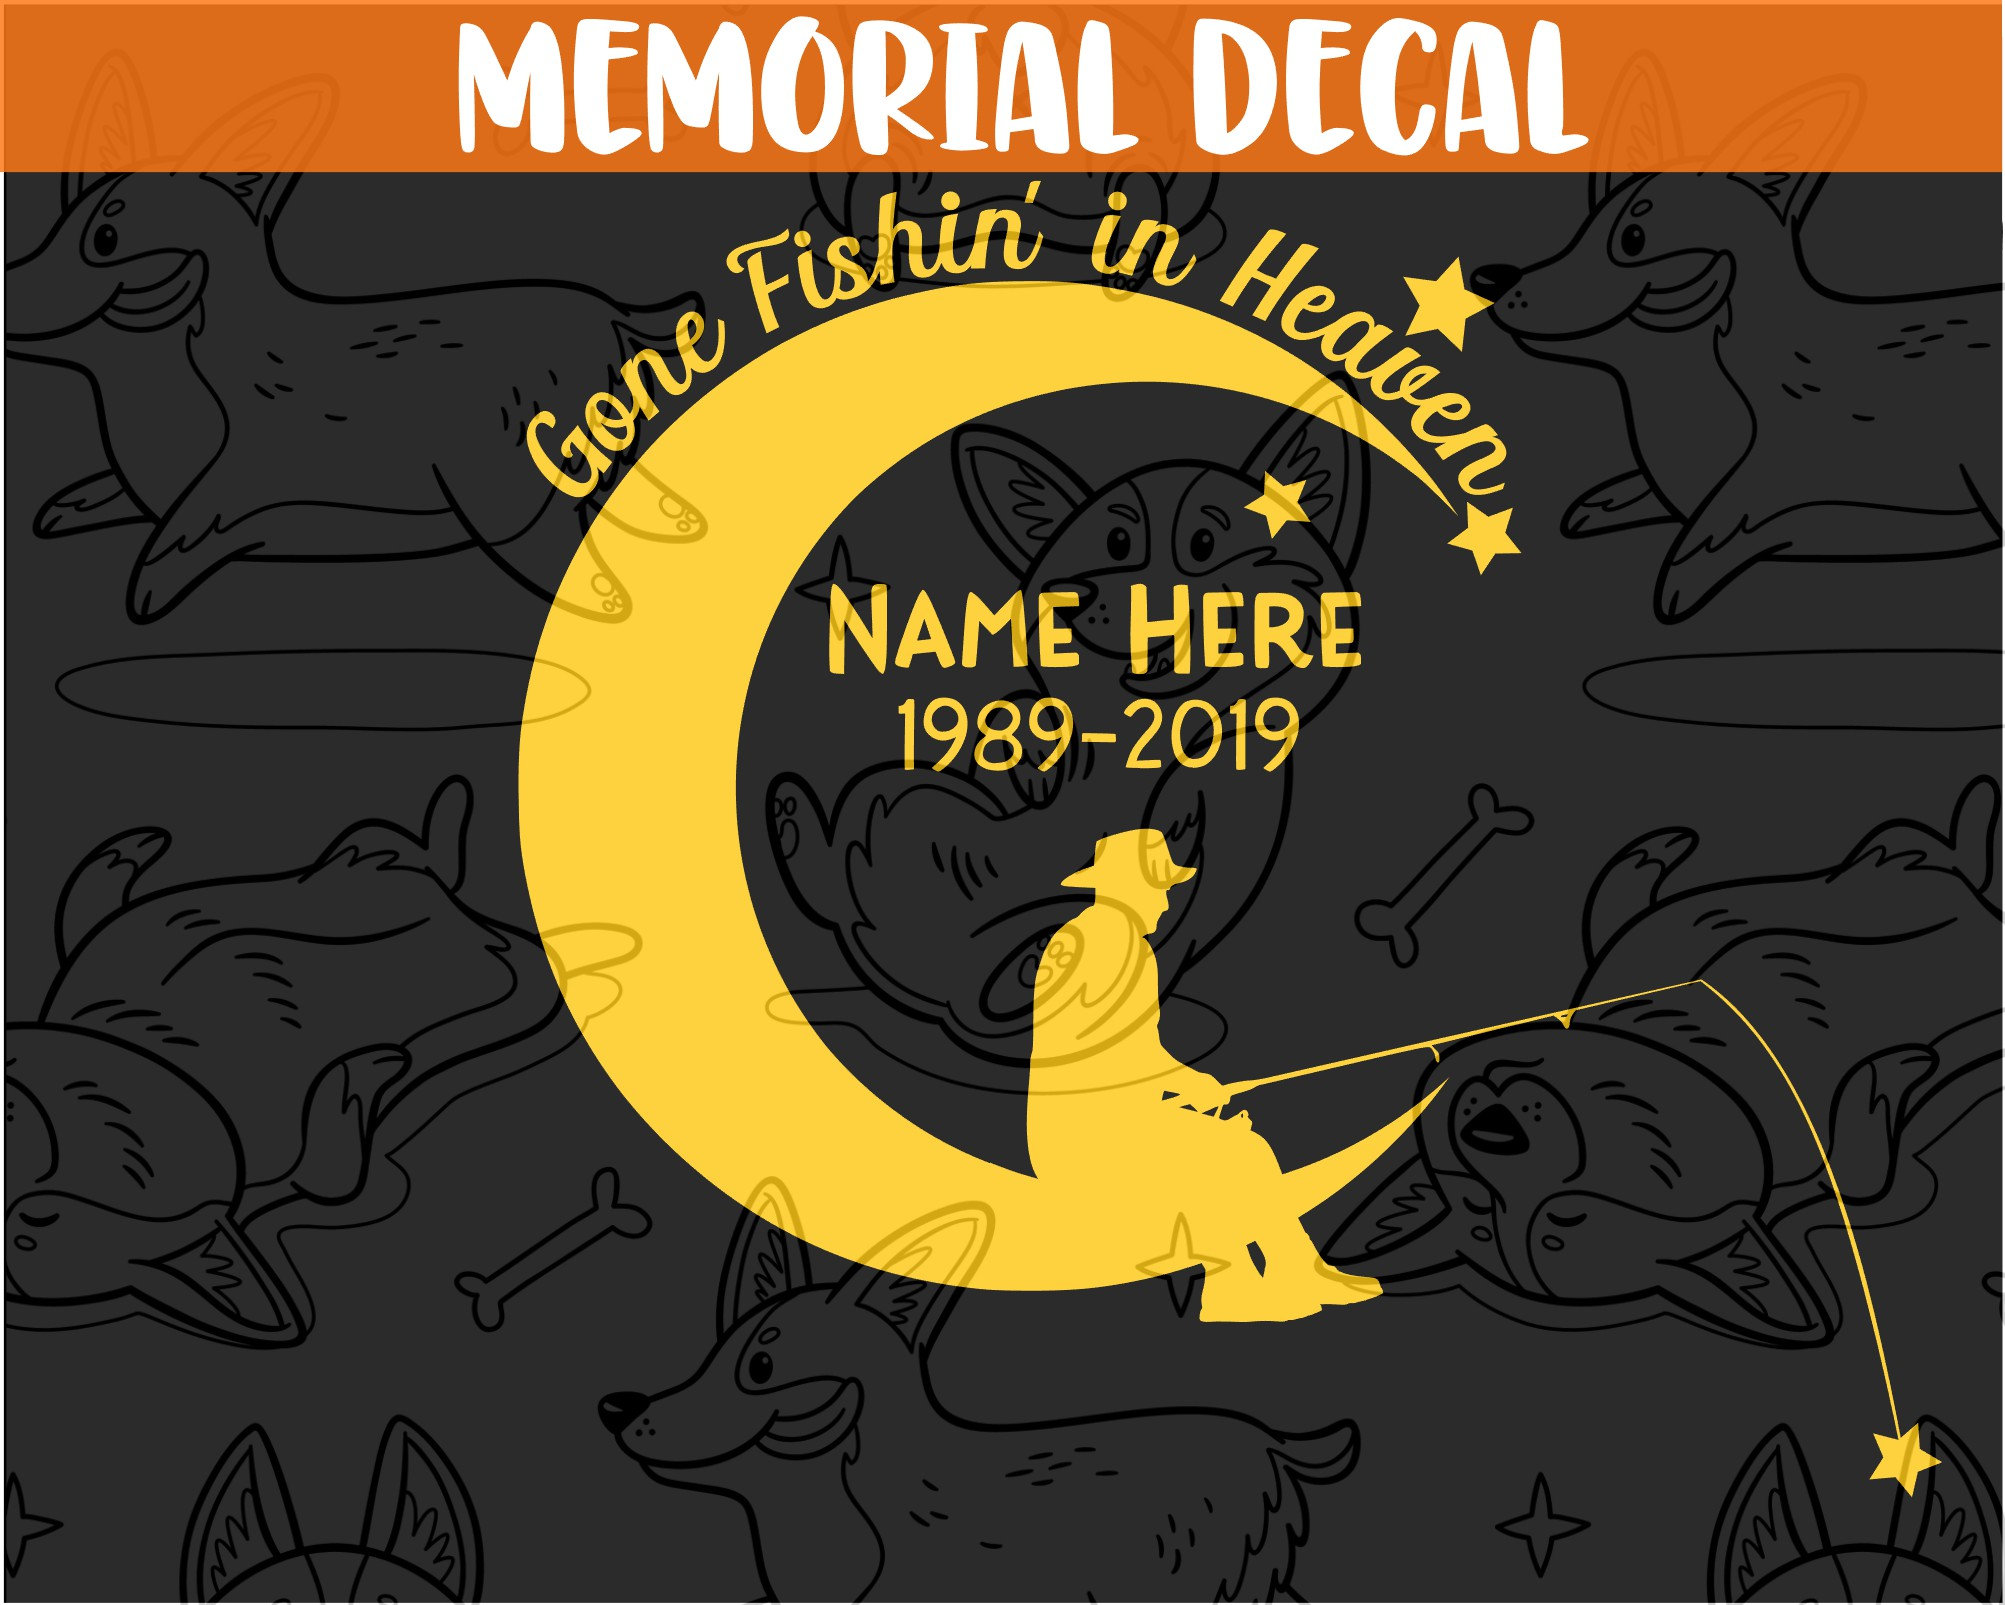 Gone Fishing in Heaven Memorial Vinyl Decal Sticker RIP in Loving